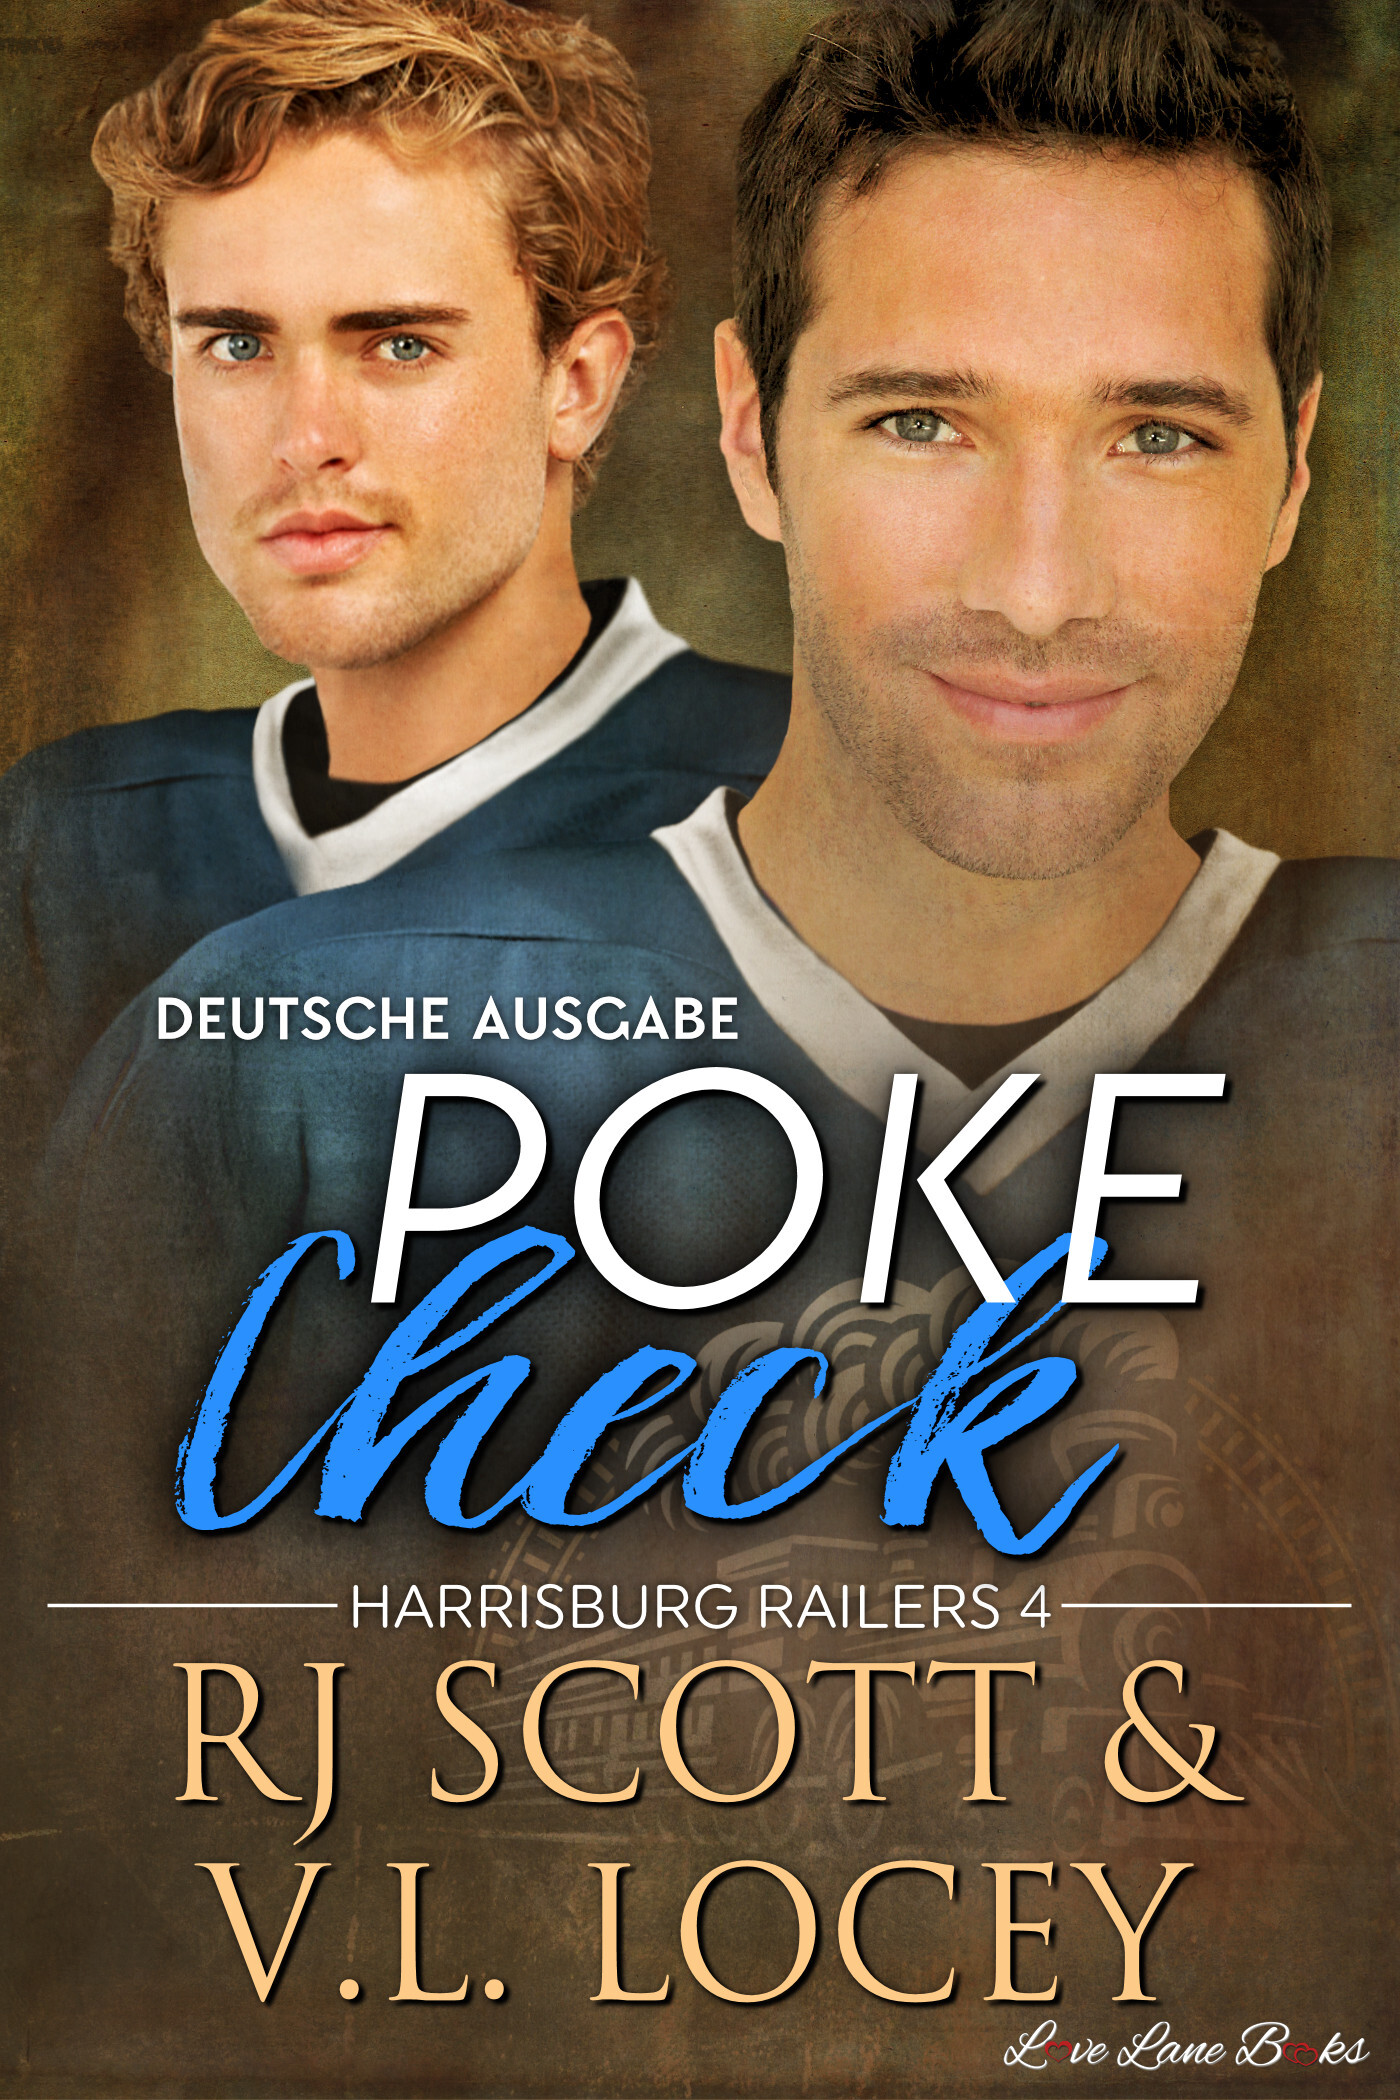 Poke Check (Deutsche Ausgabe) RJ Scott MM Romance